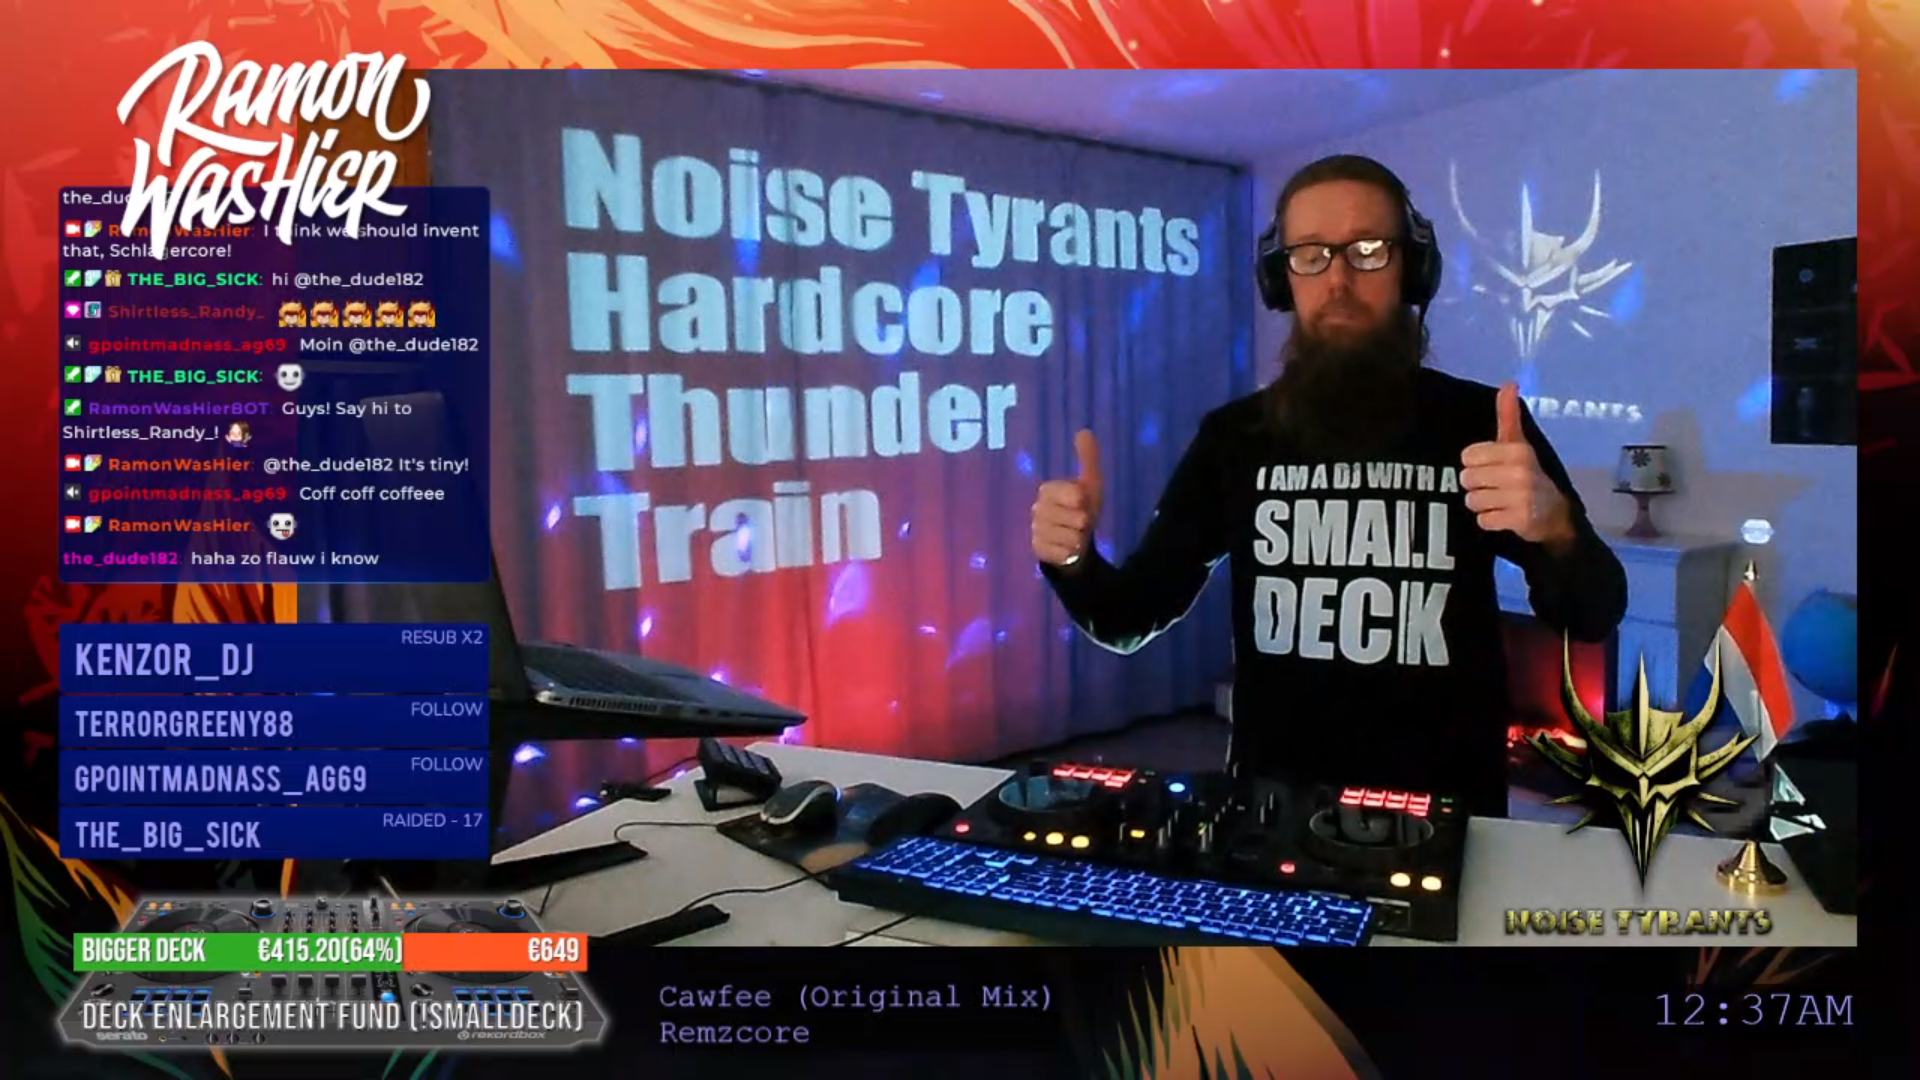 Noise Tyrants Hardcore Thunder Train!